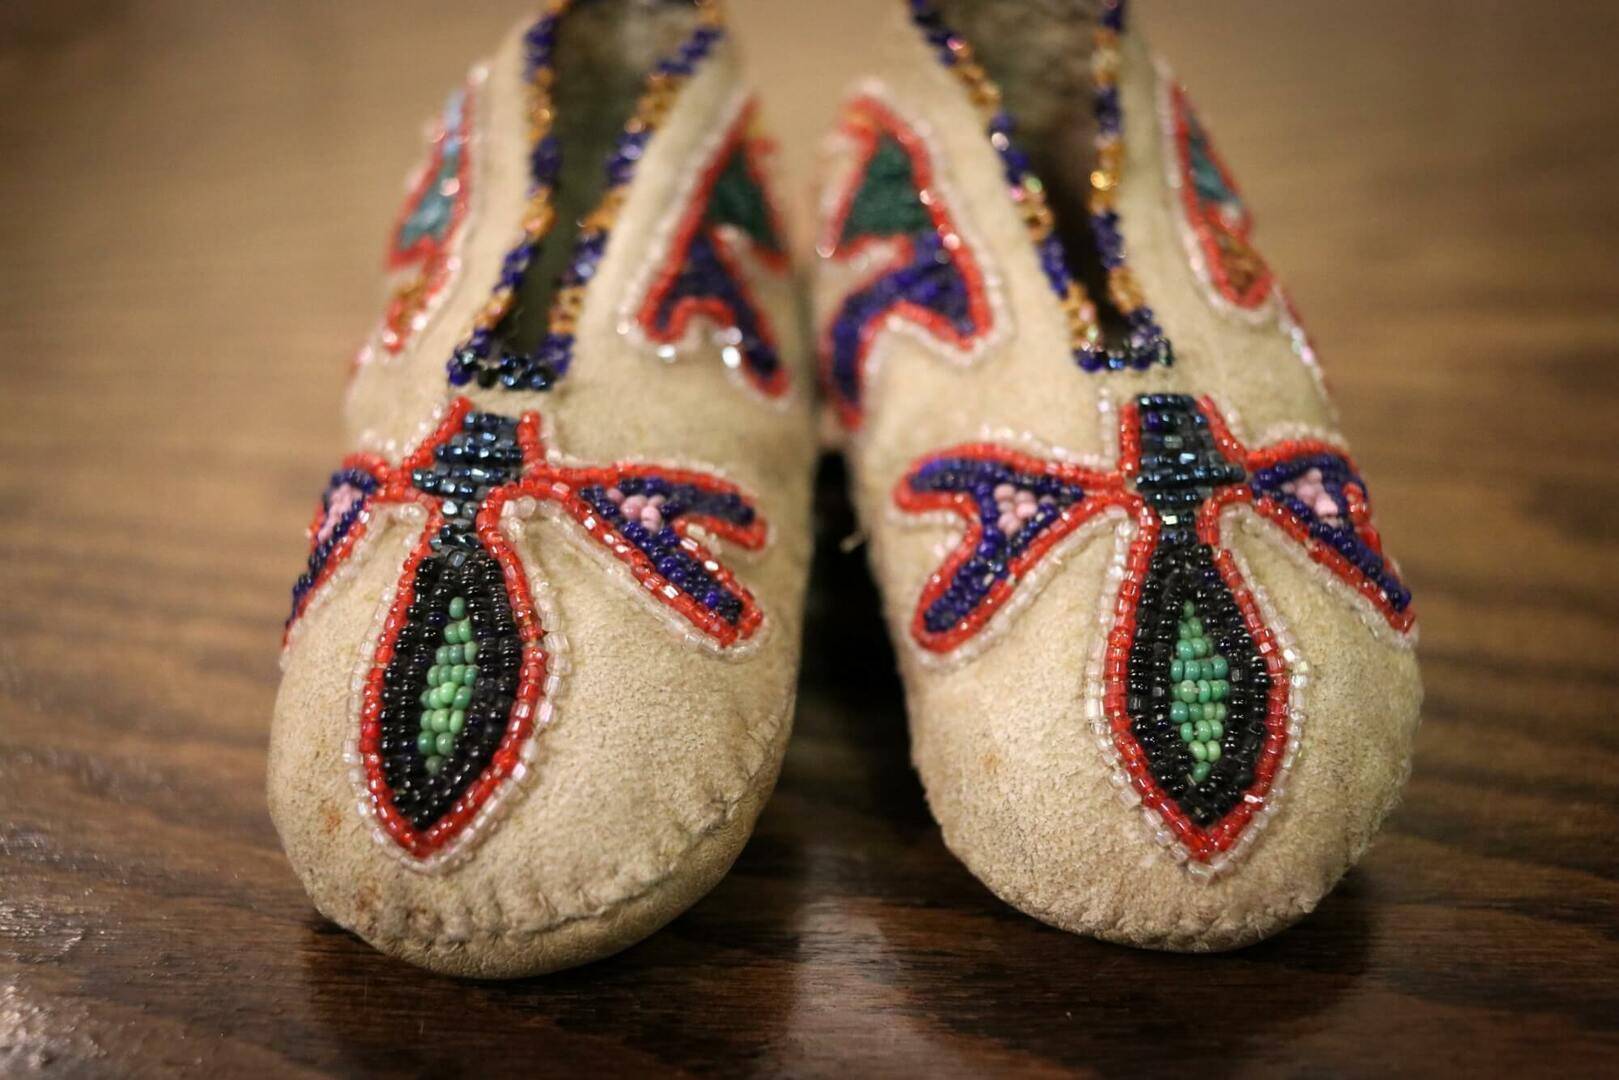 Decoratively beaded shoes